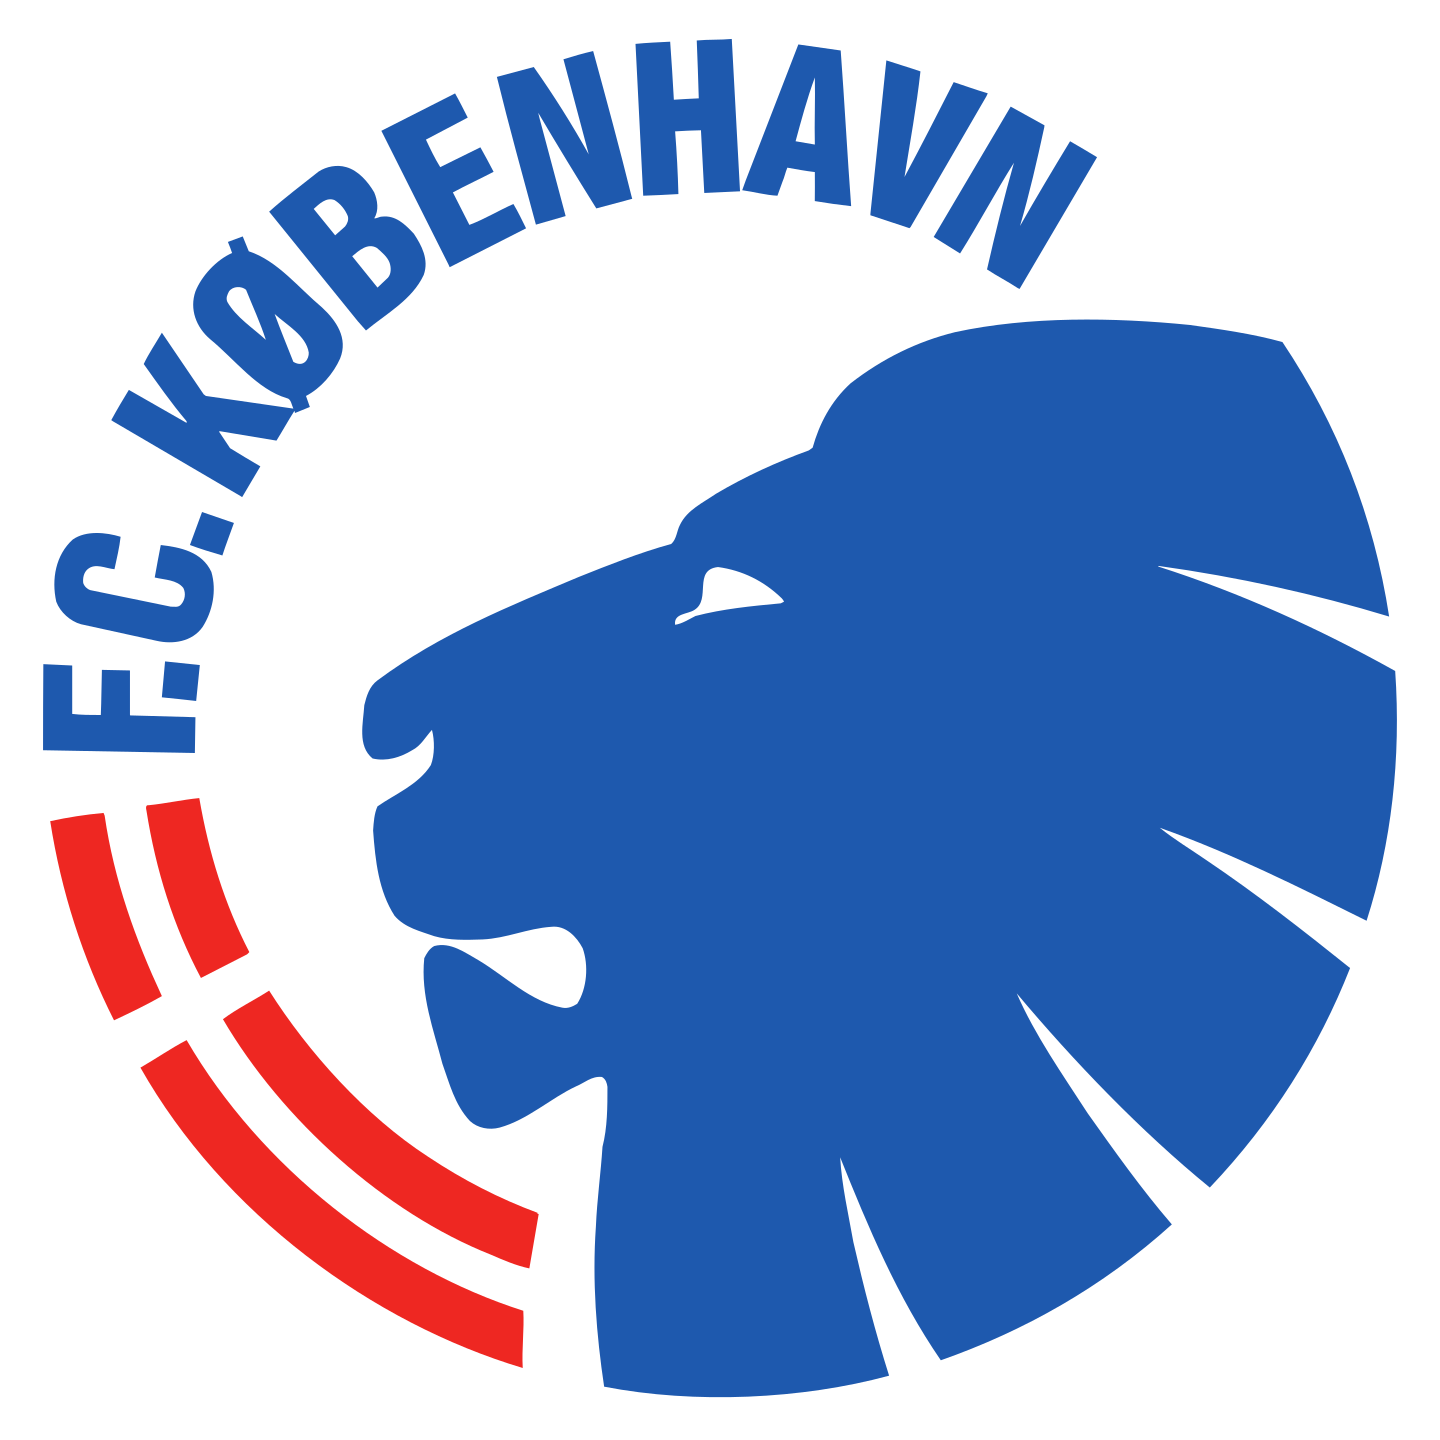 fc copenhagen logo 2 - F.C. Copenhagen - F.C. København Logo